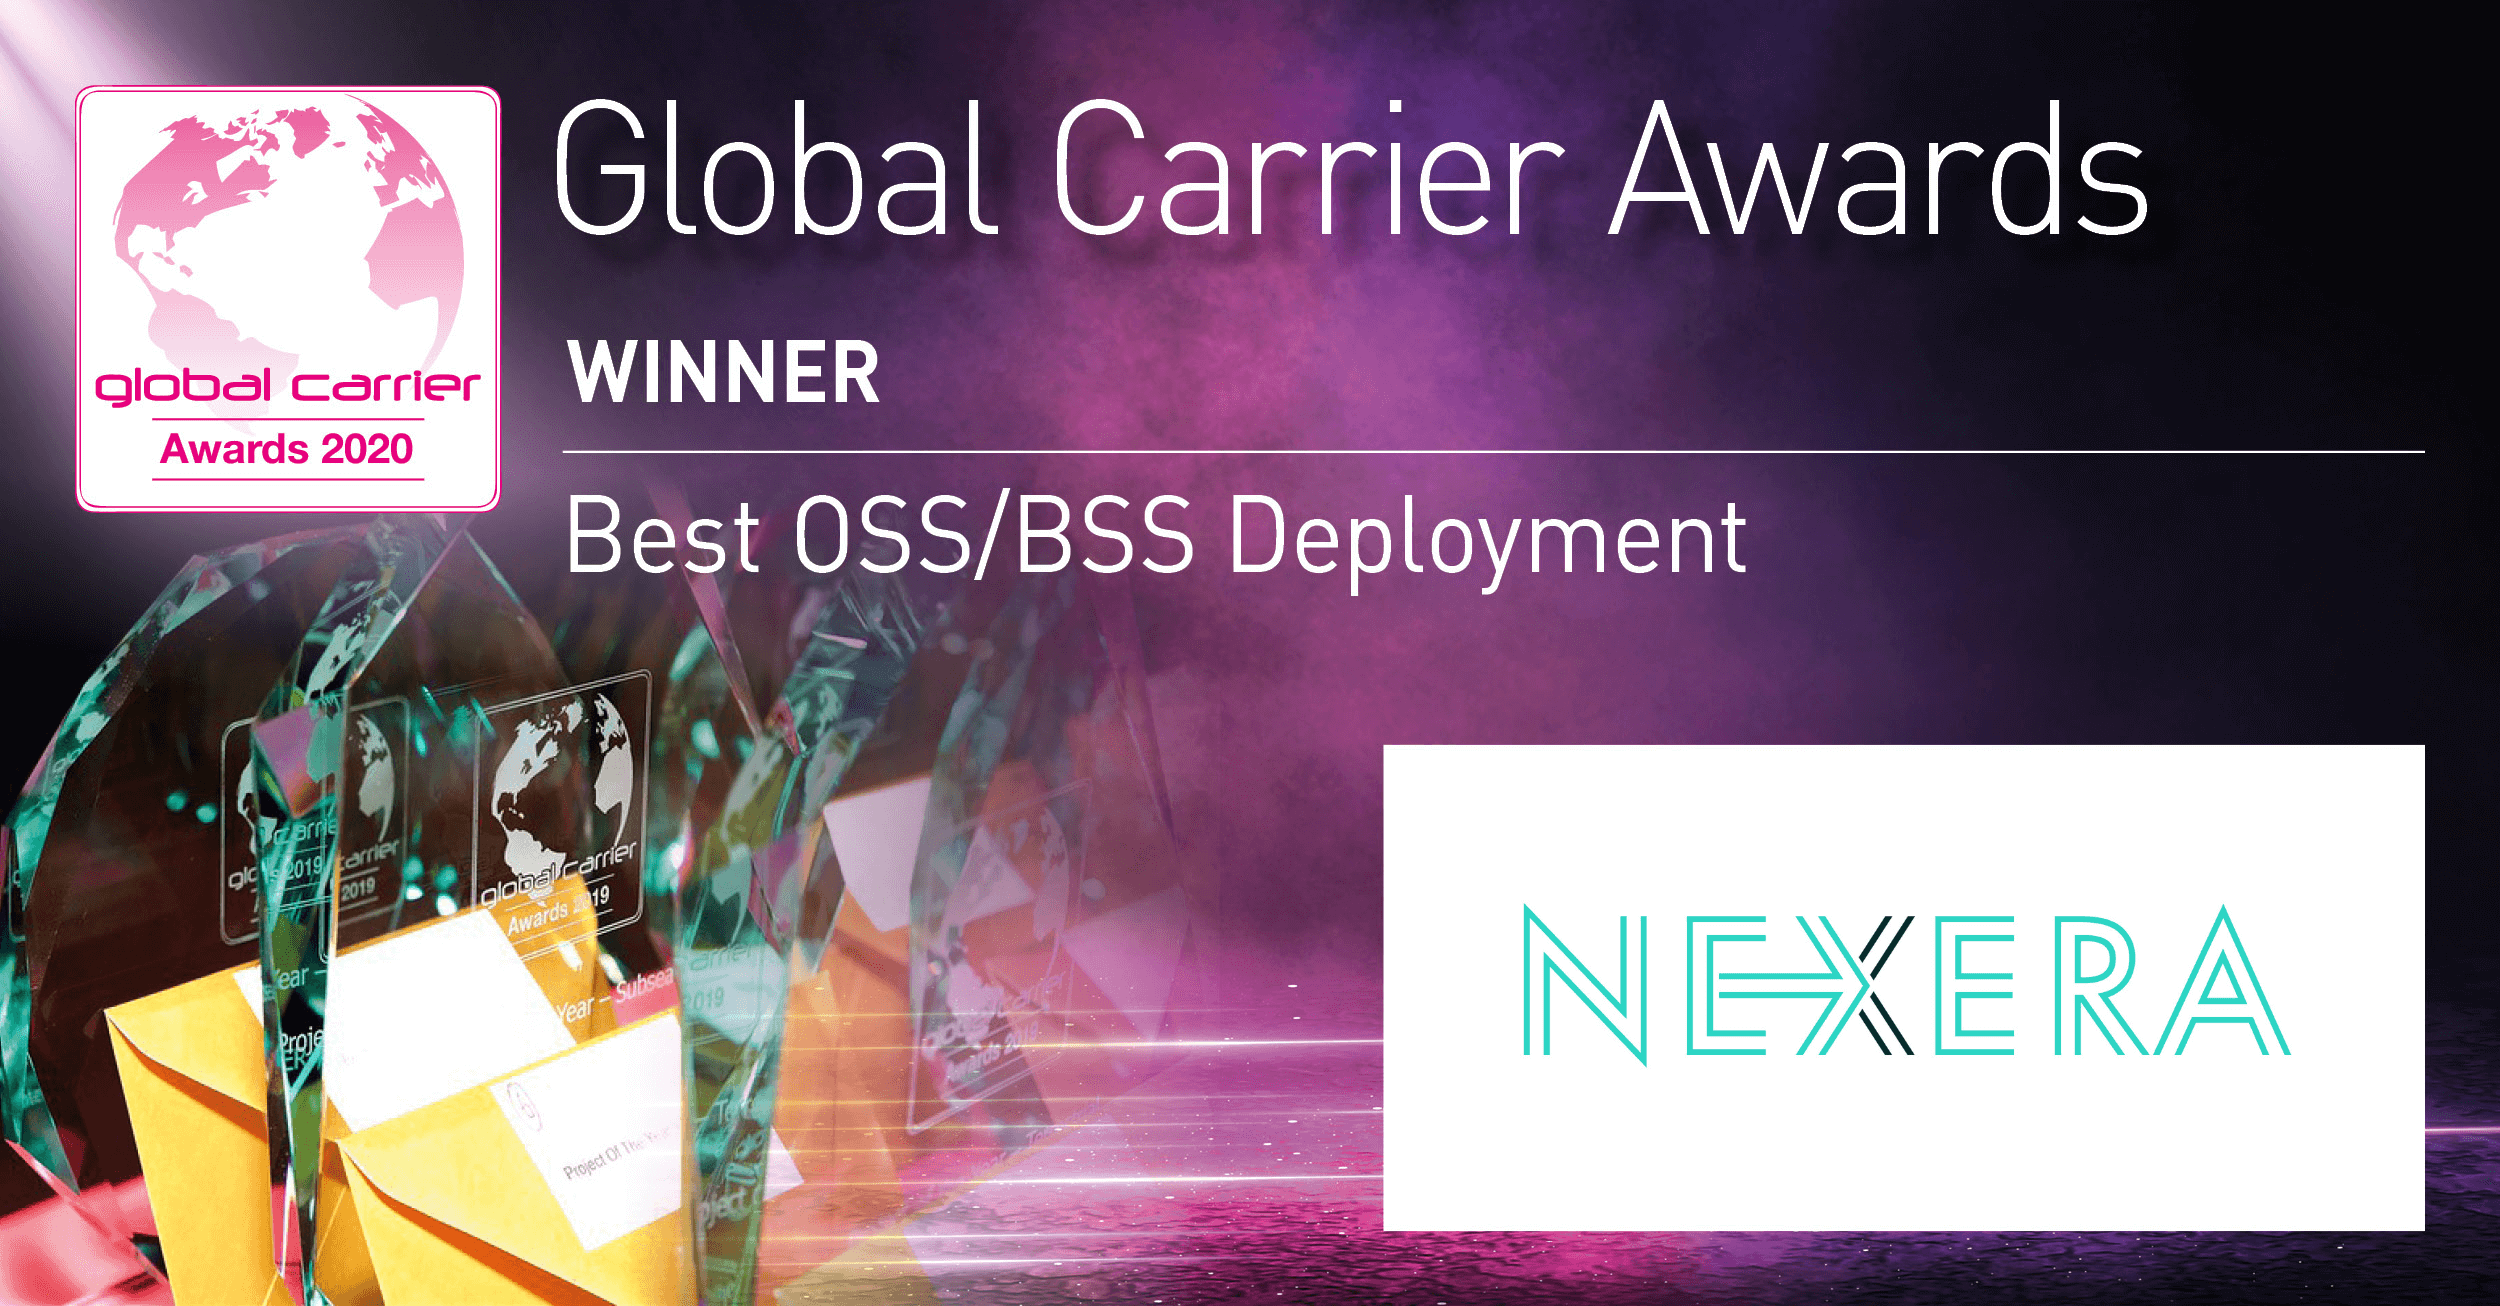 Nagroda Global Carrier Awards 2020 Best OSS/BSS Deployment dla NEXERY